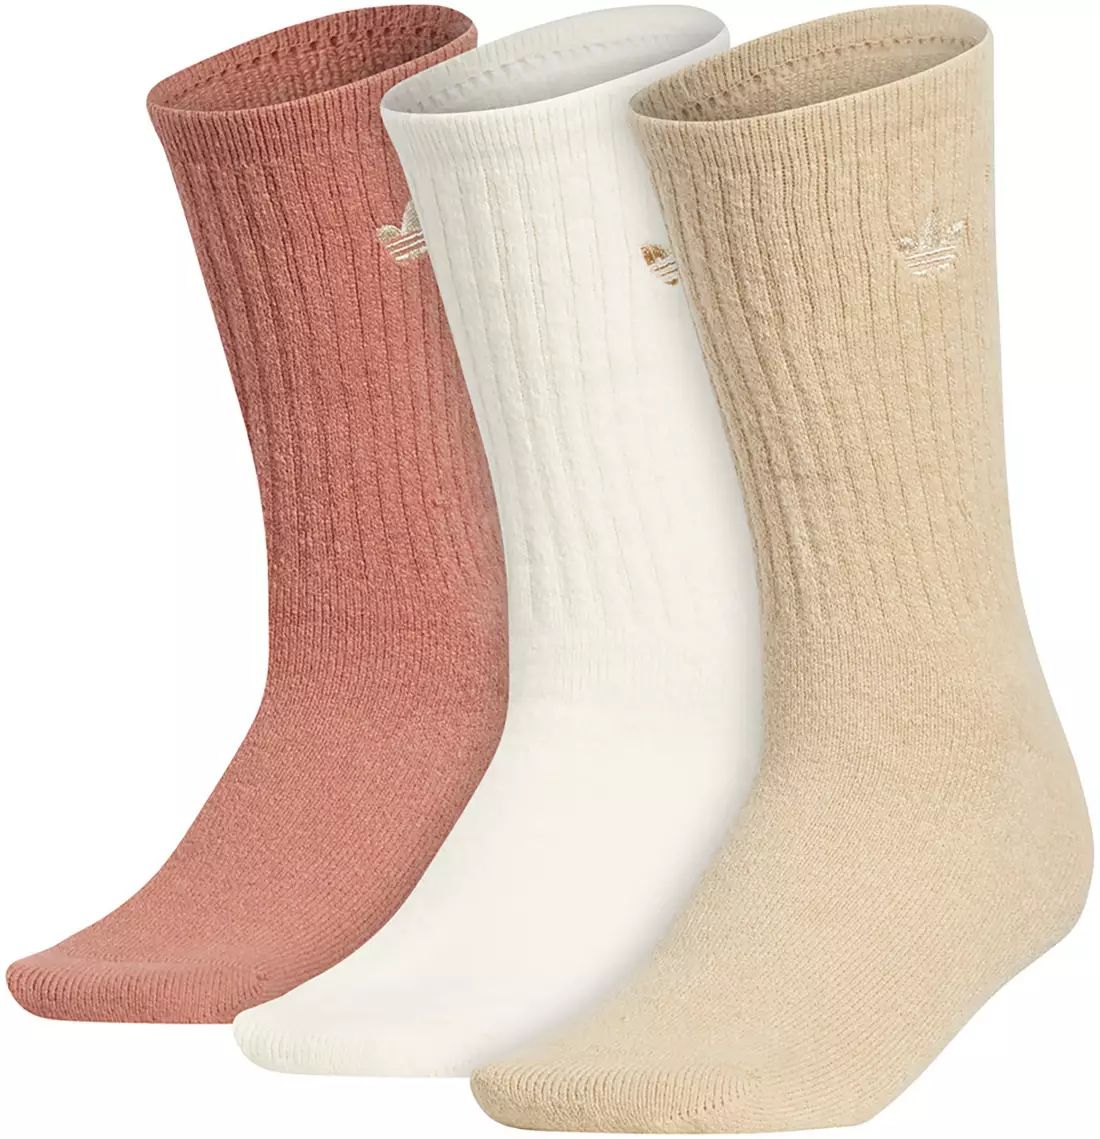 adidas Originals Women's Comfort Crew Socks - 3 Pack | Dick's Sporting Goods